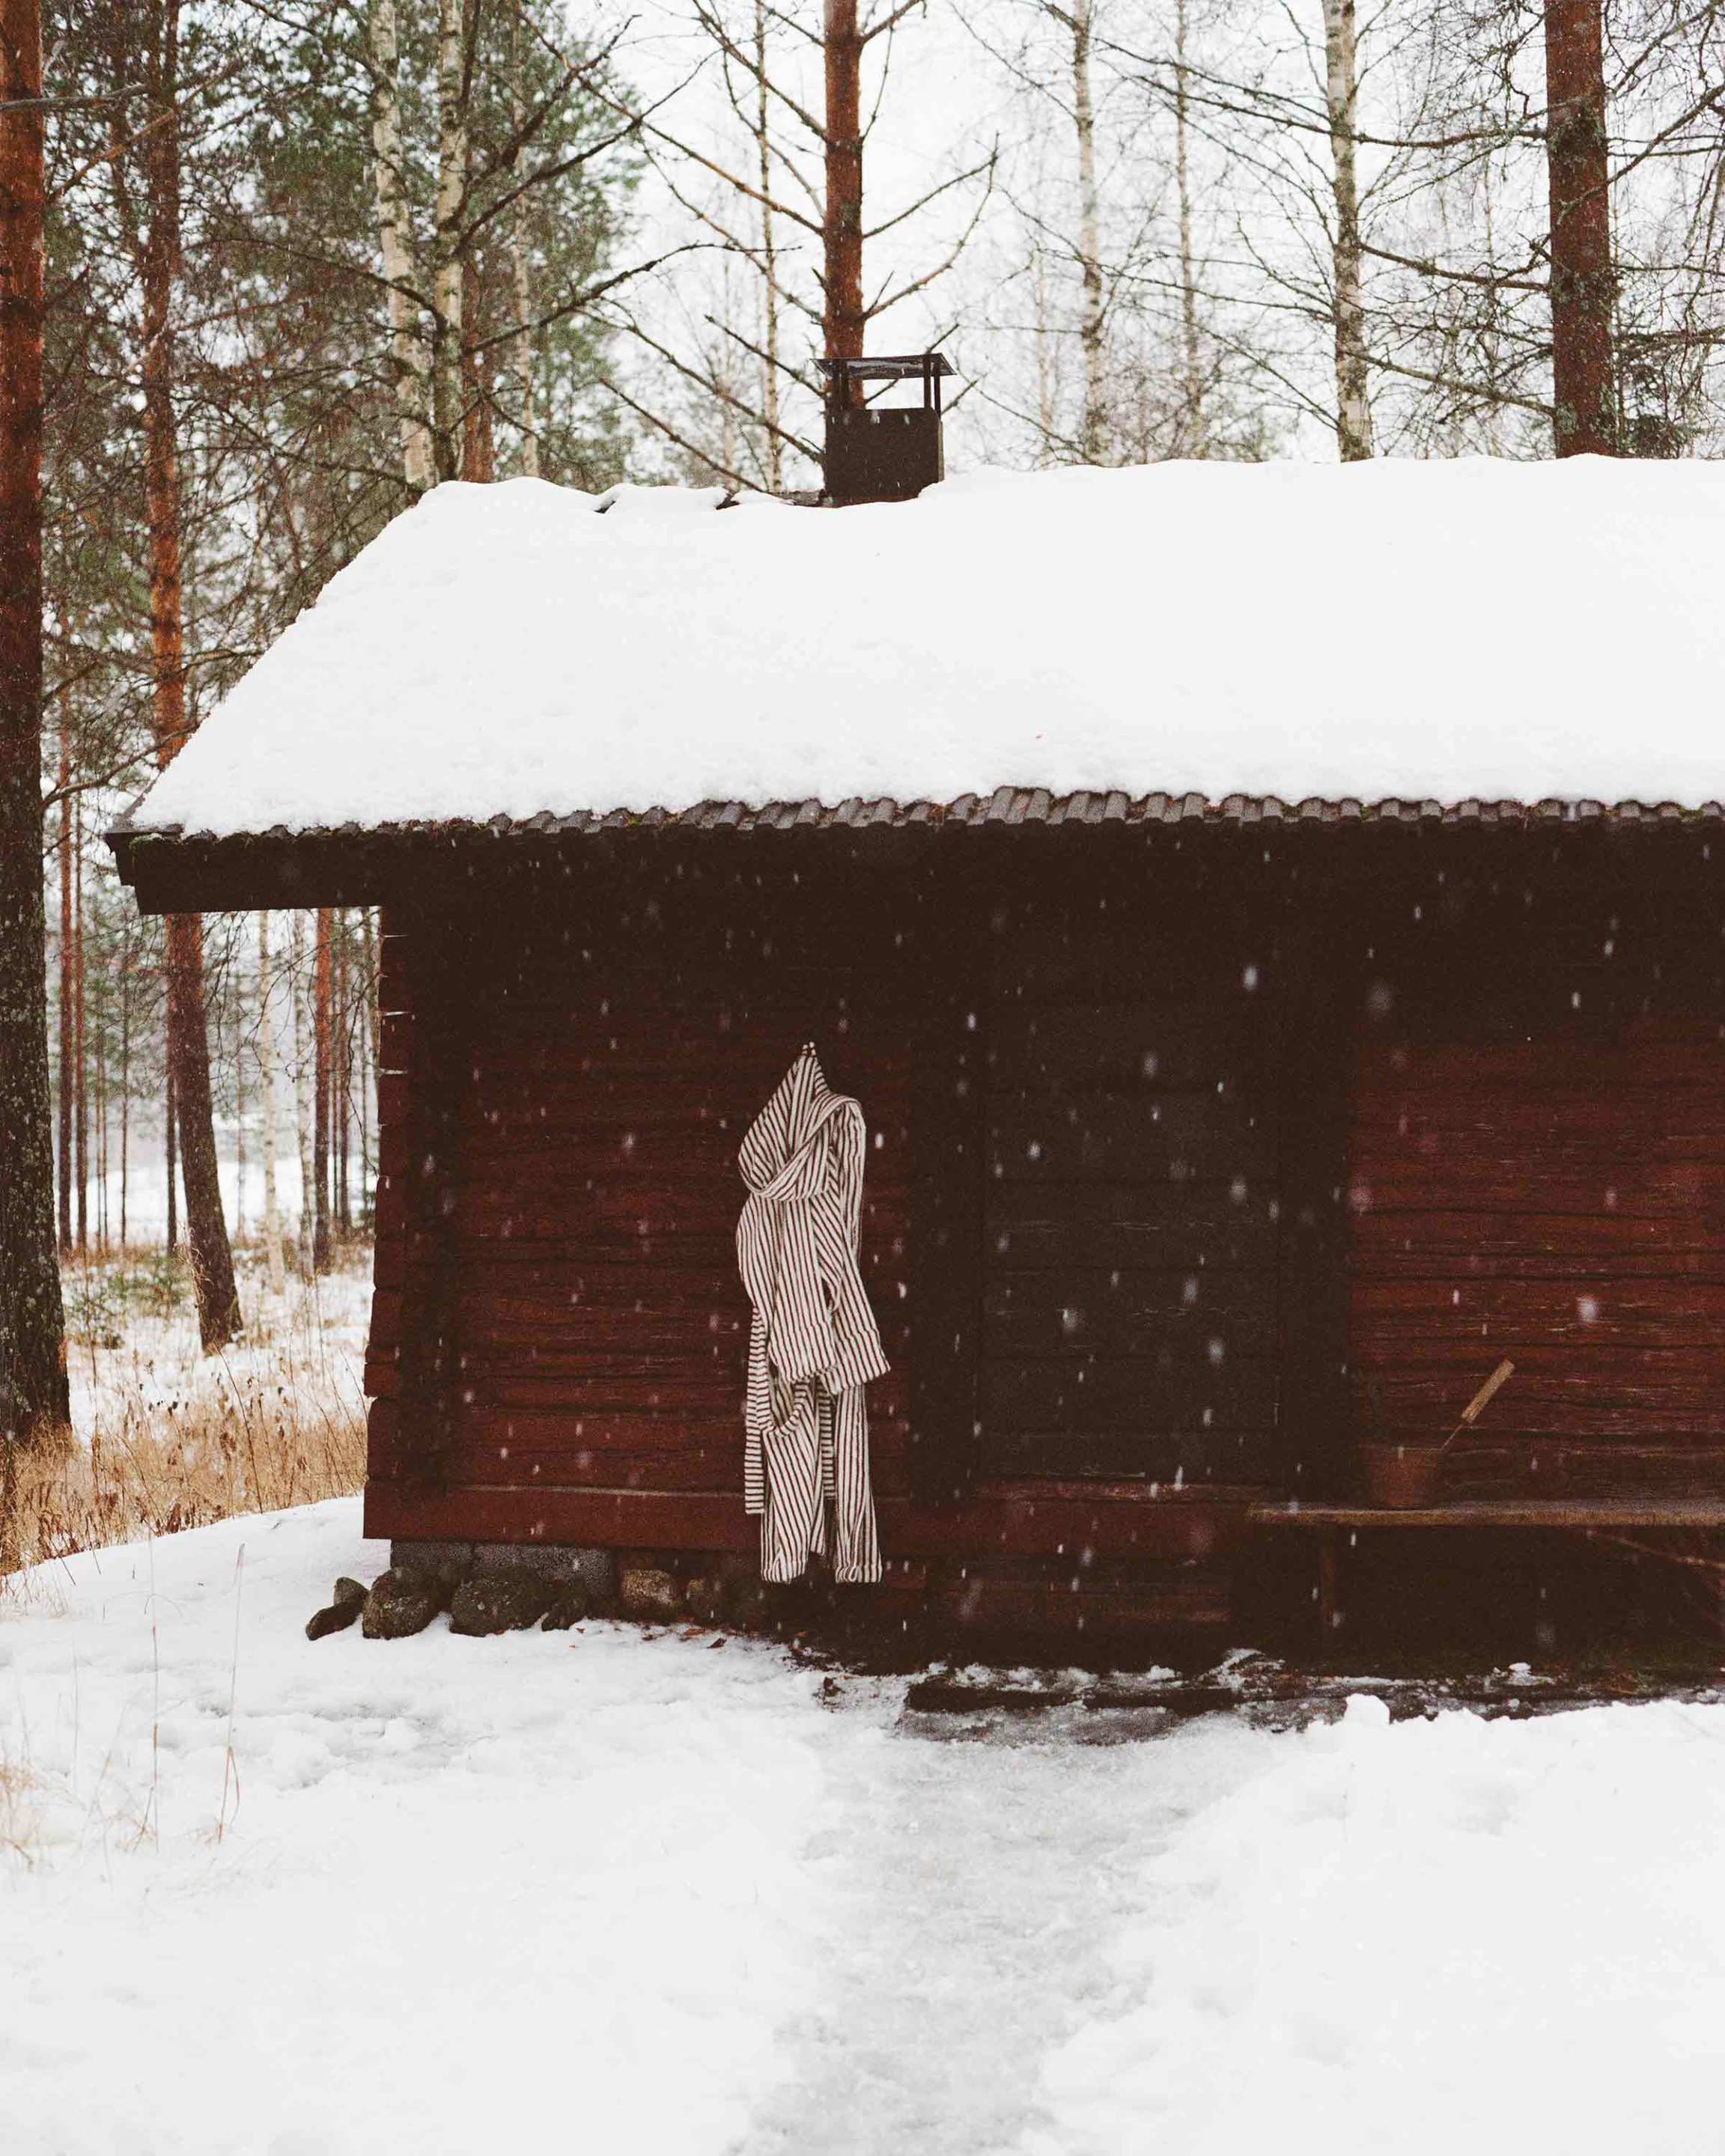 Kodiak Stripes bathrobe in the Finnish sauna culture